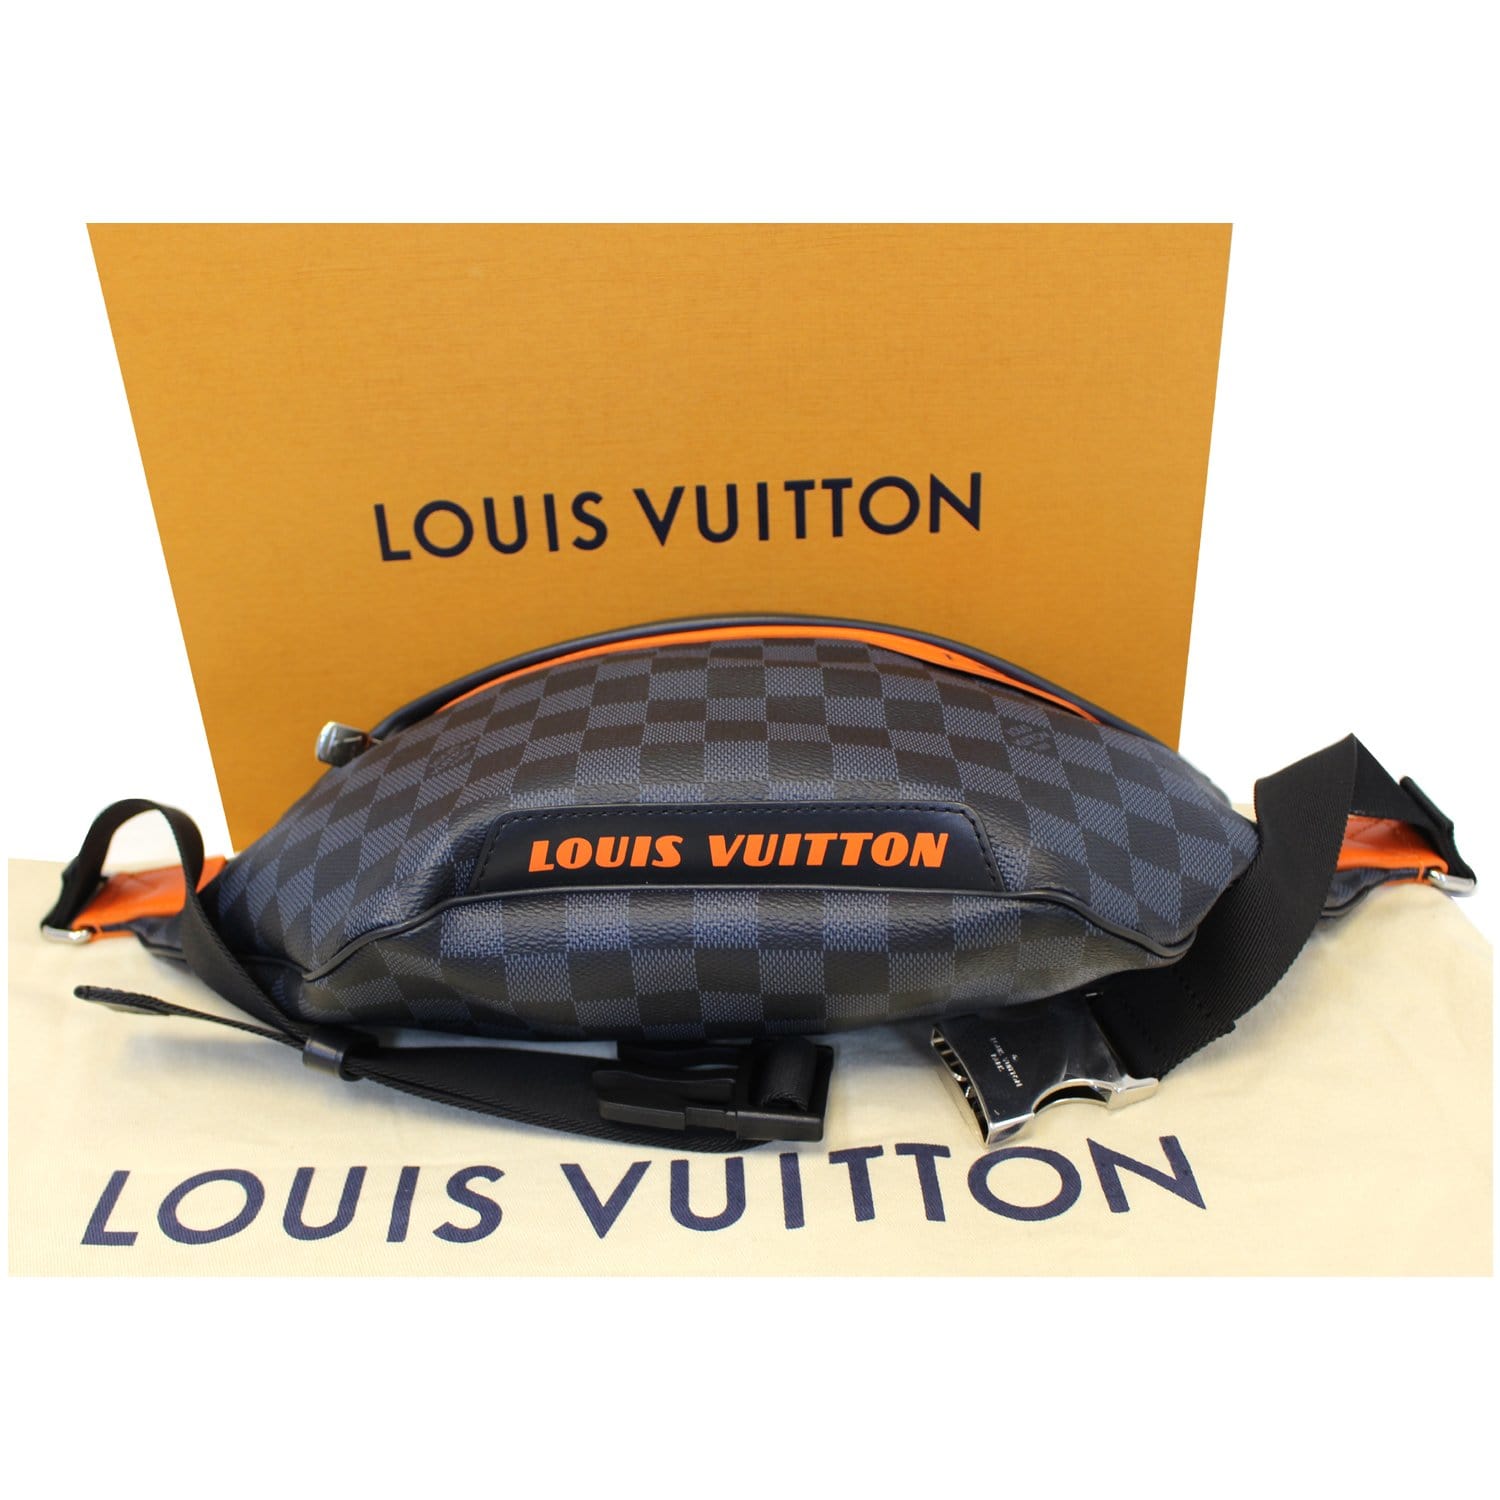 Damier Cobalt Race Louis Vuitton - For Sale on 1stDibs